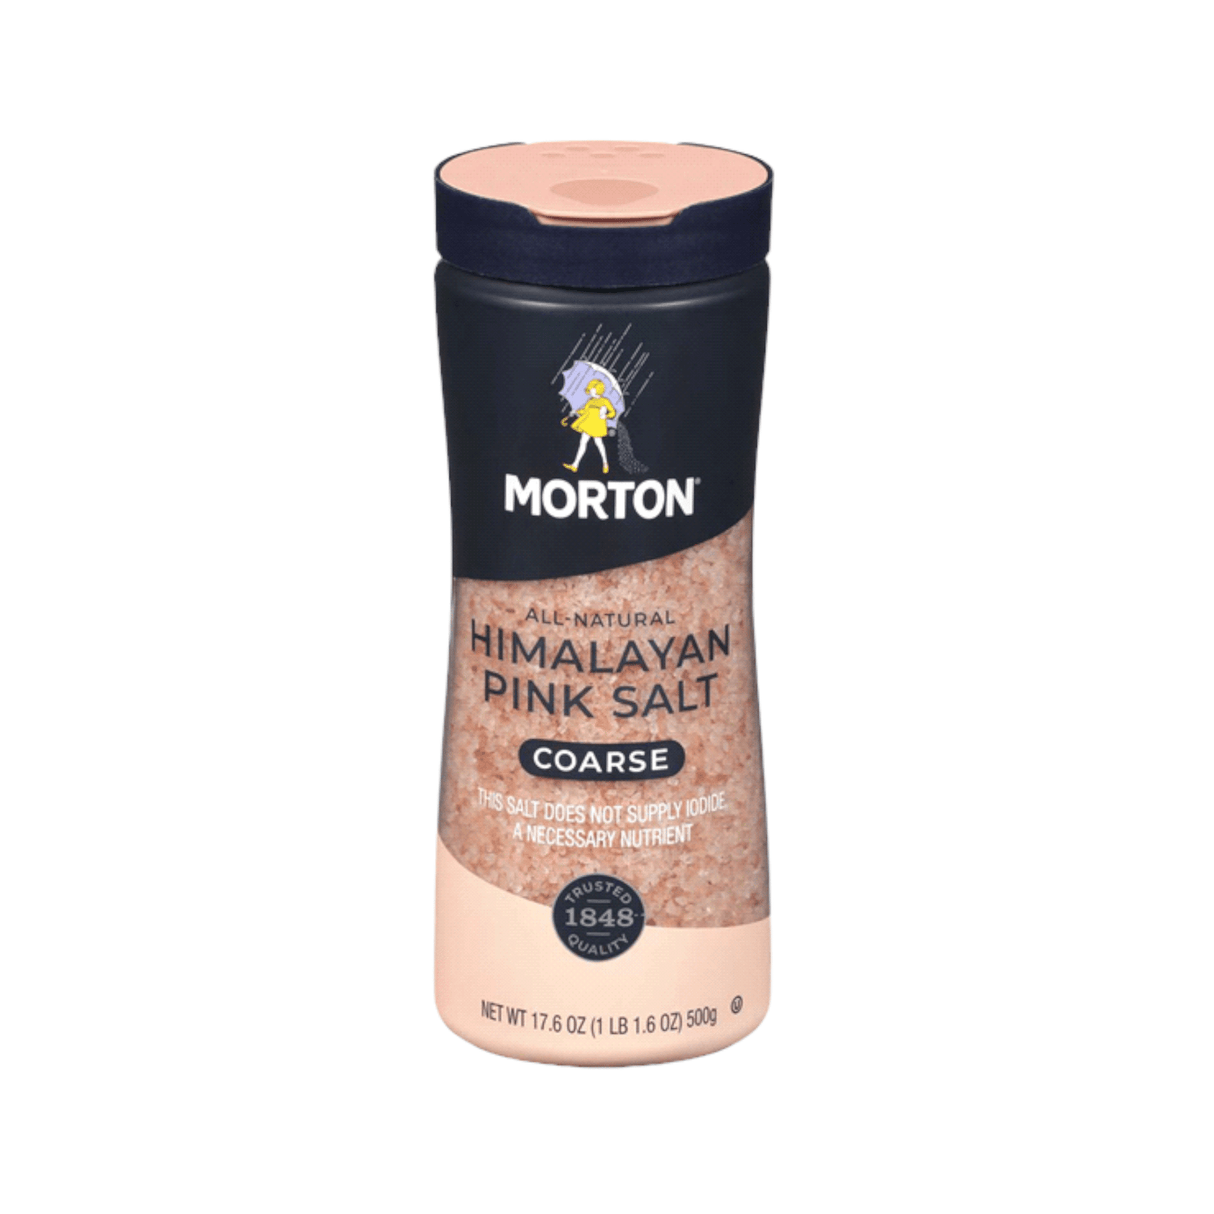 Morton Himalayan Pink Salt Coarse